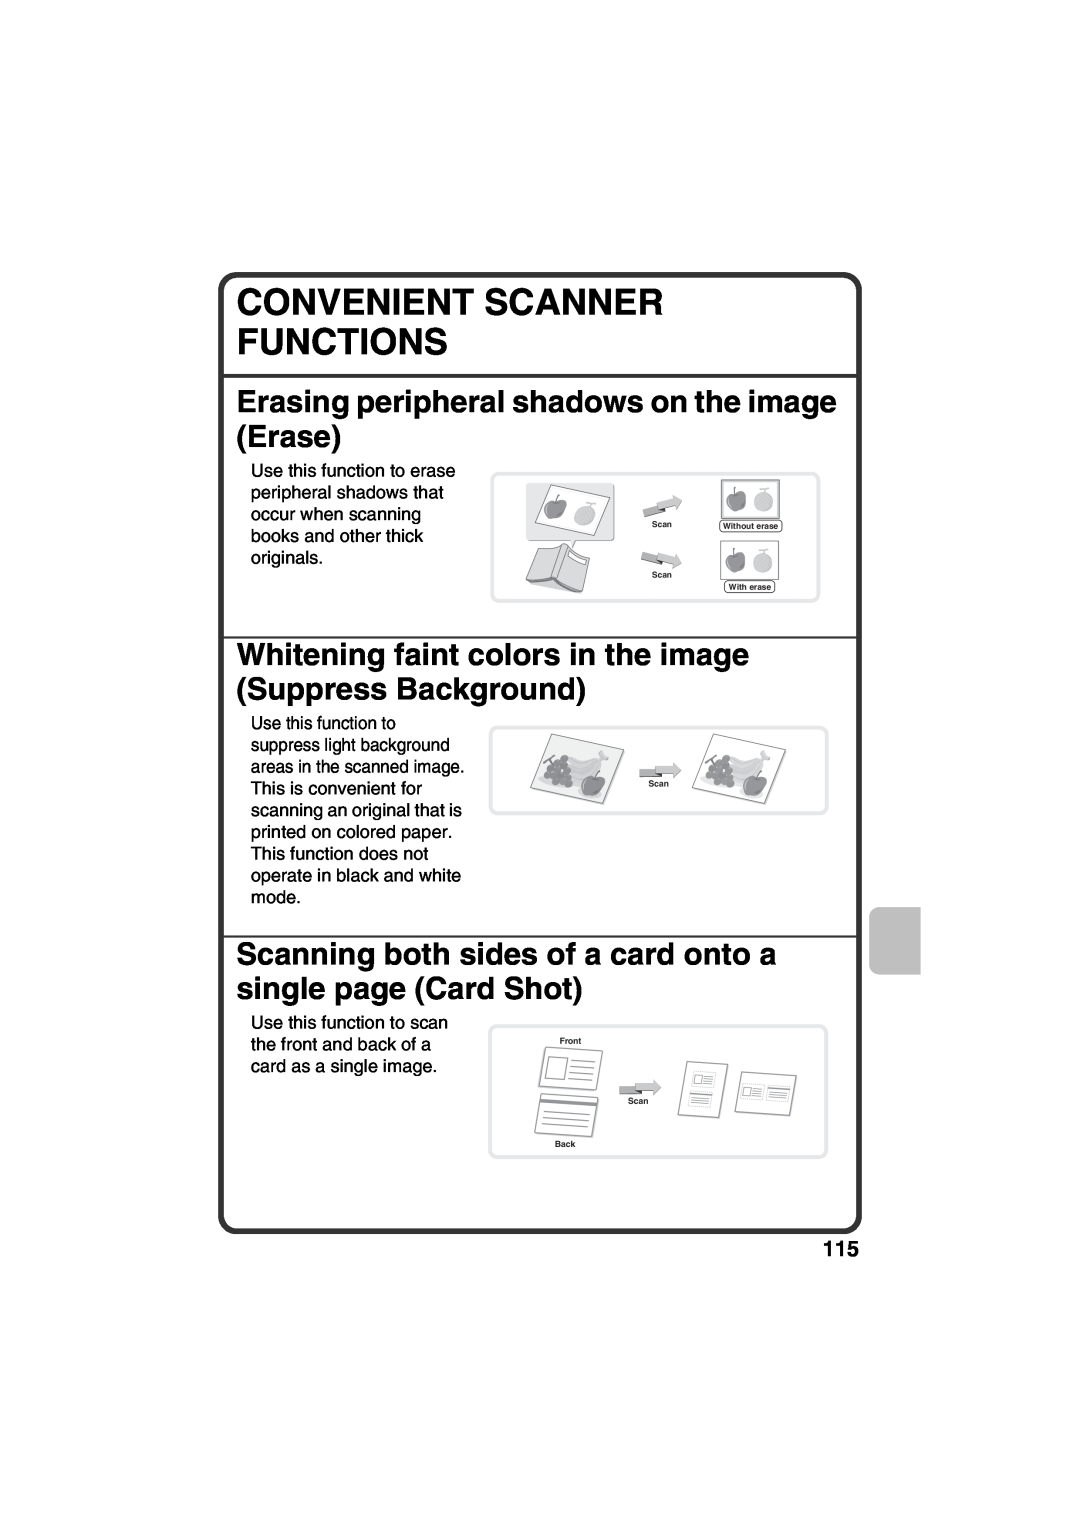 Sharp TINSE4377FCZZ, MX-B401 quick start Convenient Scanner Functions, Erasing peripheral shadows on the image Erase 